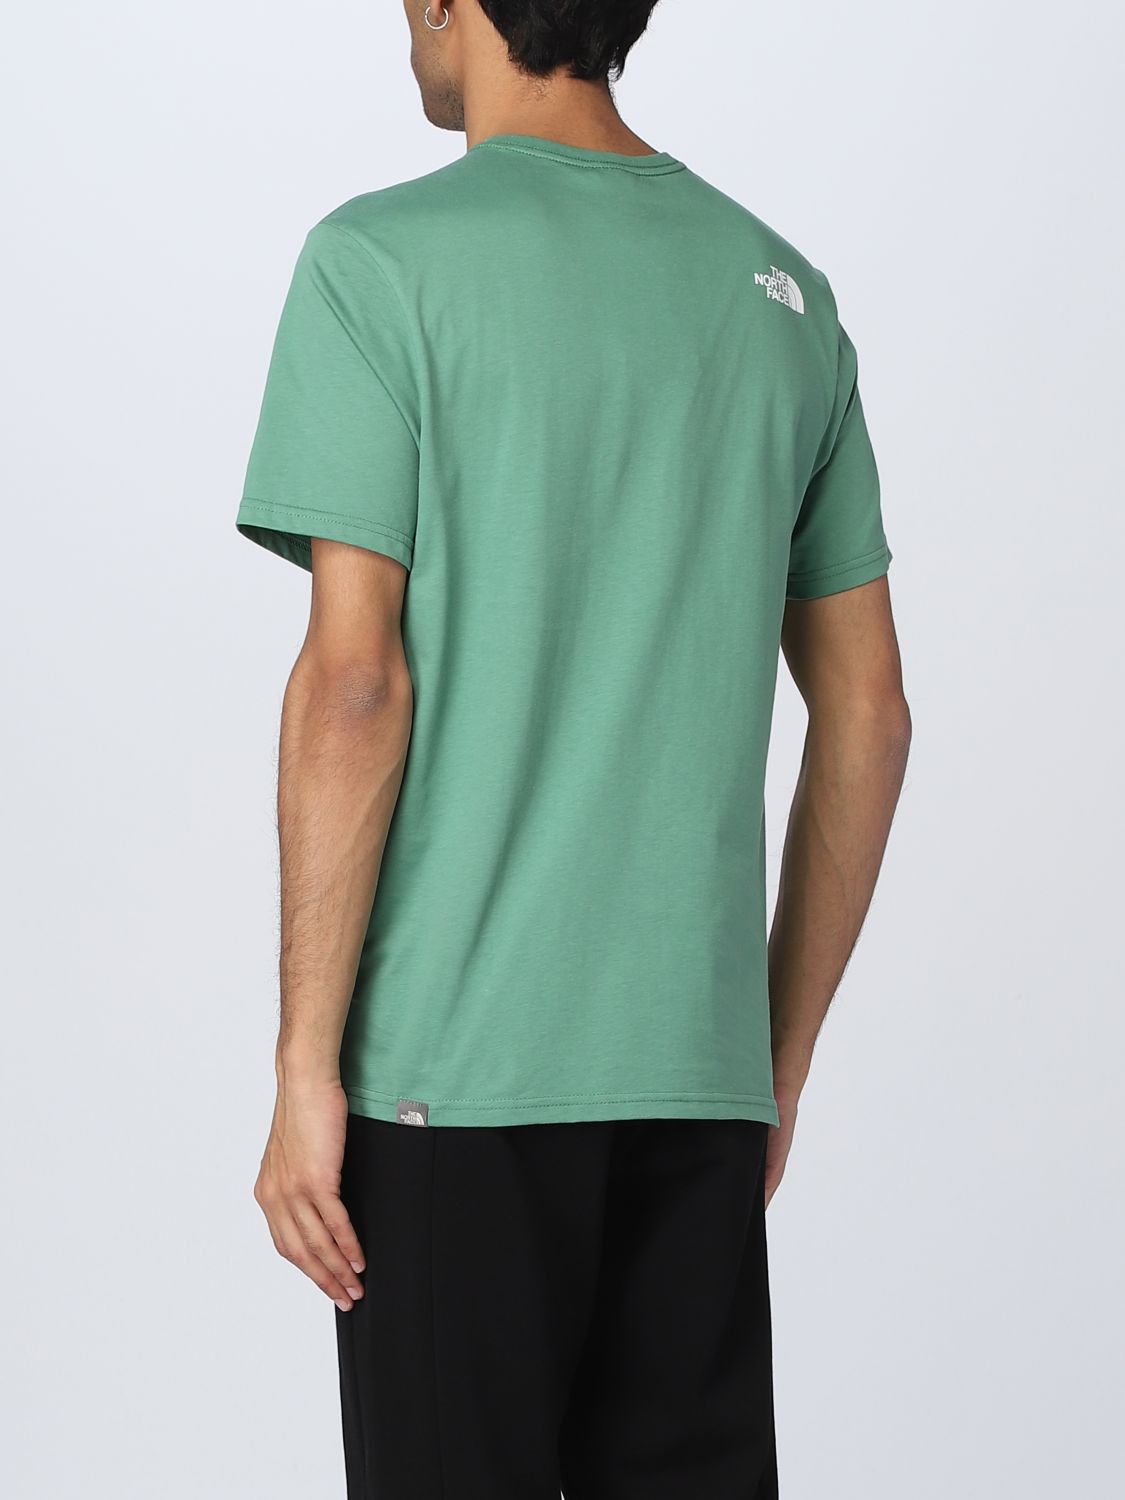 T-Shirt The North Face: The North Face Herren T-Shirt grün 3